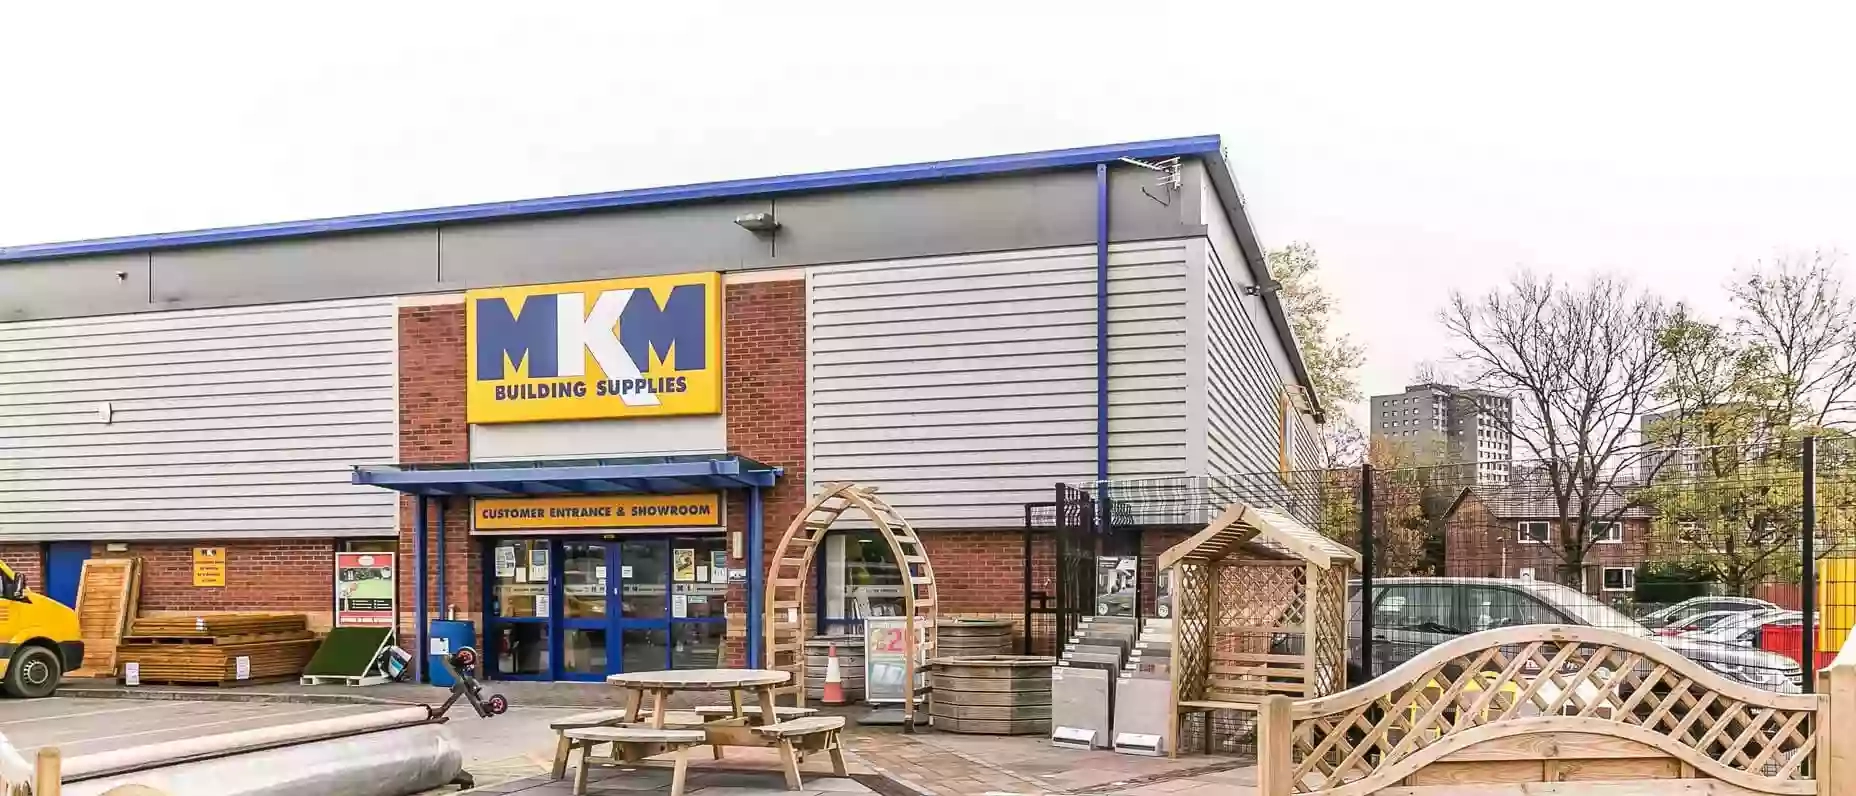 MKM Building Supplies Macclesfield